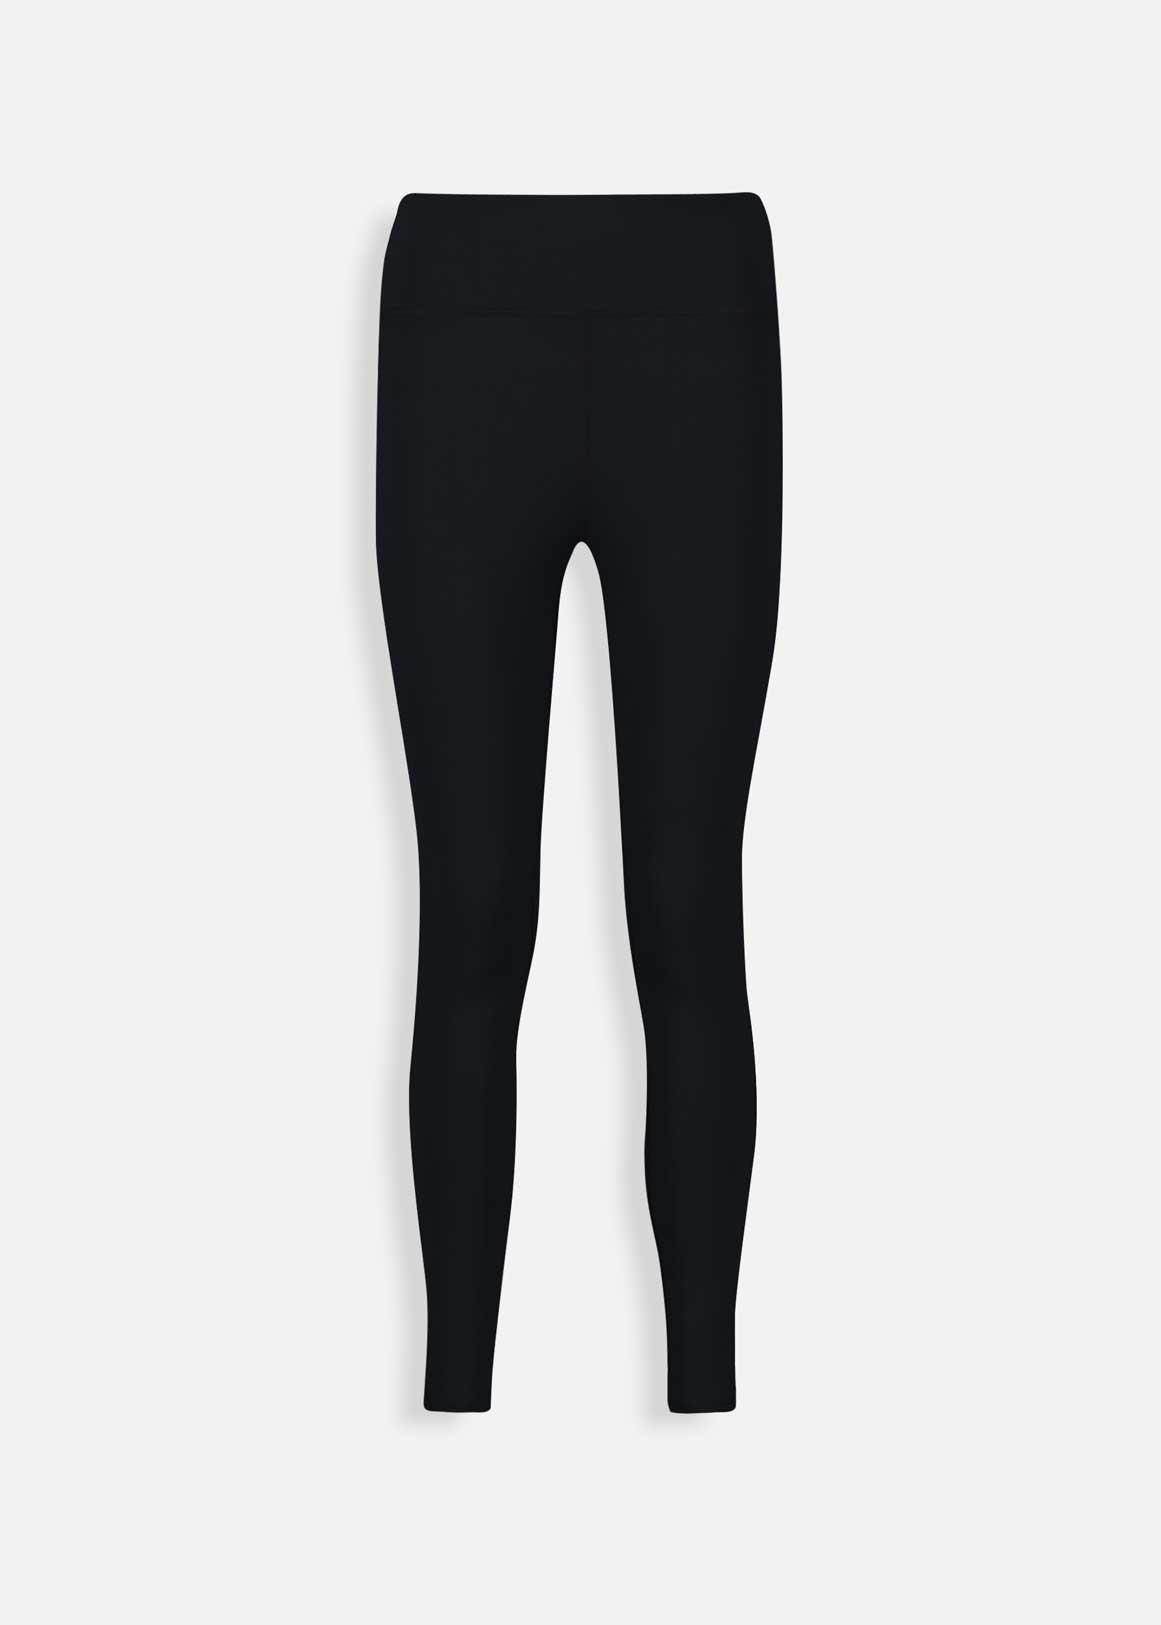 Nylon Womens Sexy Sheer Yoga Leggings See Through Trousers Super Stretchy  Pants